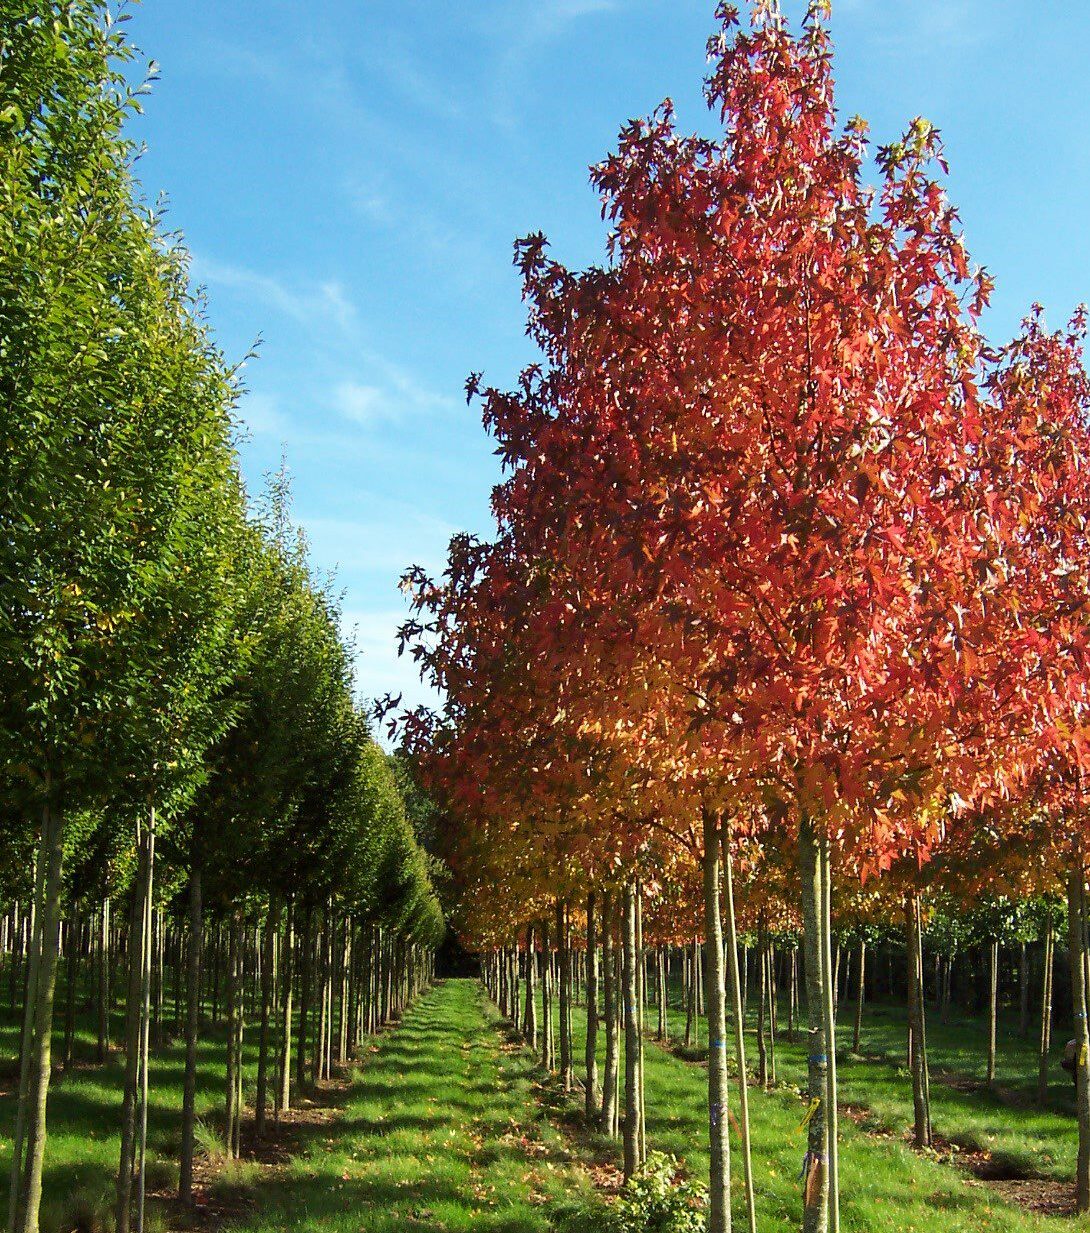 Liquidambar Worplesdon trees growing in field with autumn colour